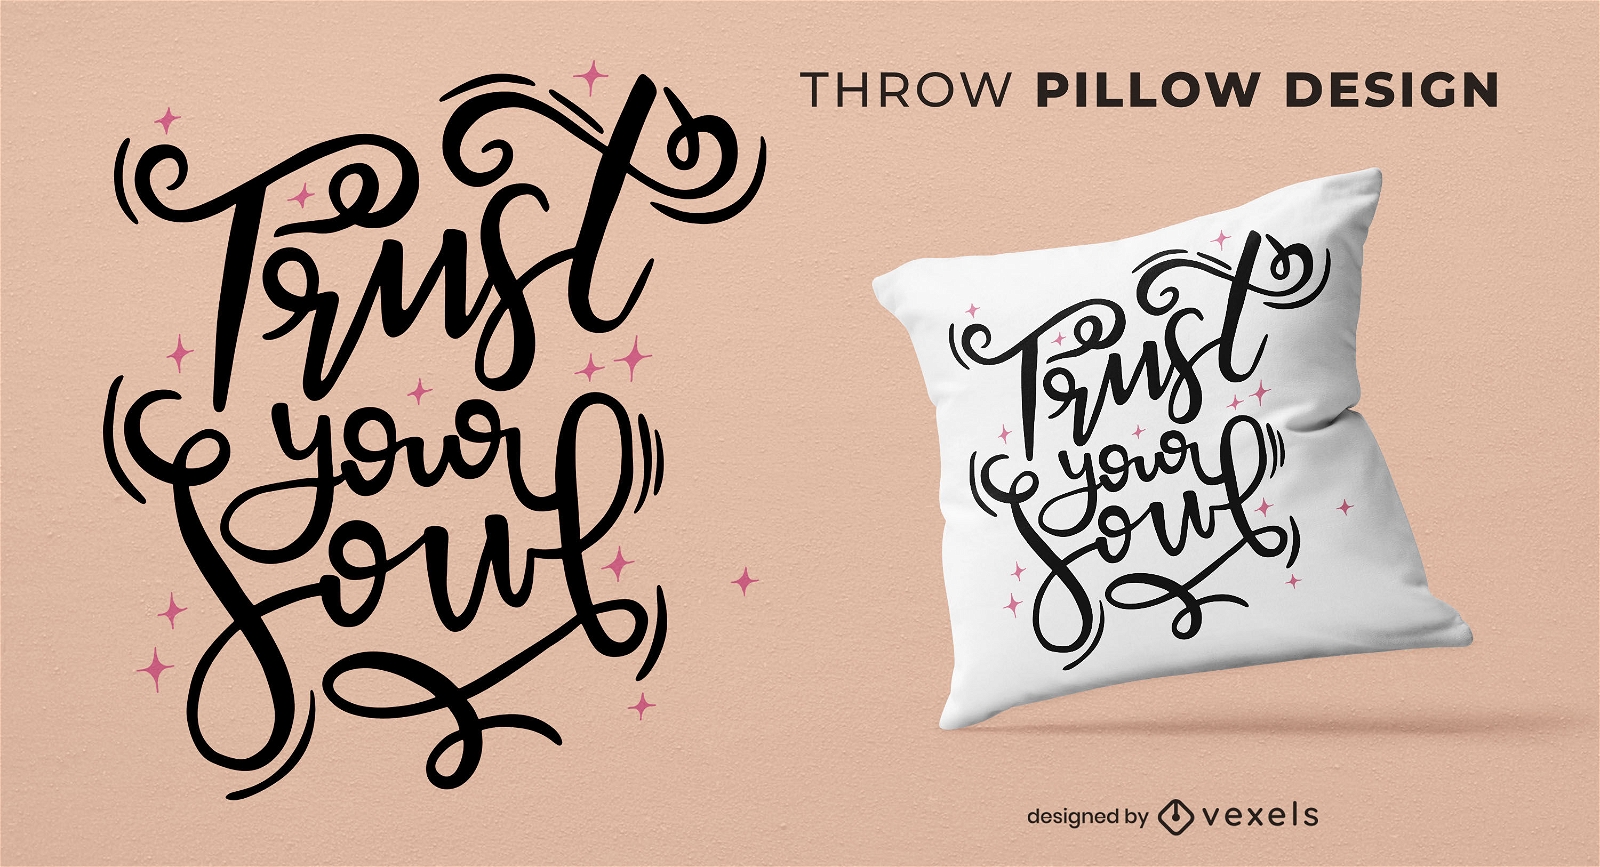 Trust your soul throw pillow design